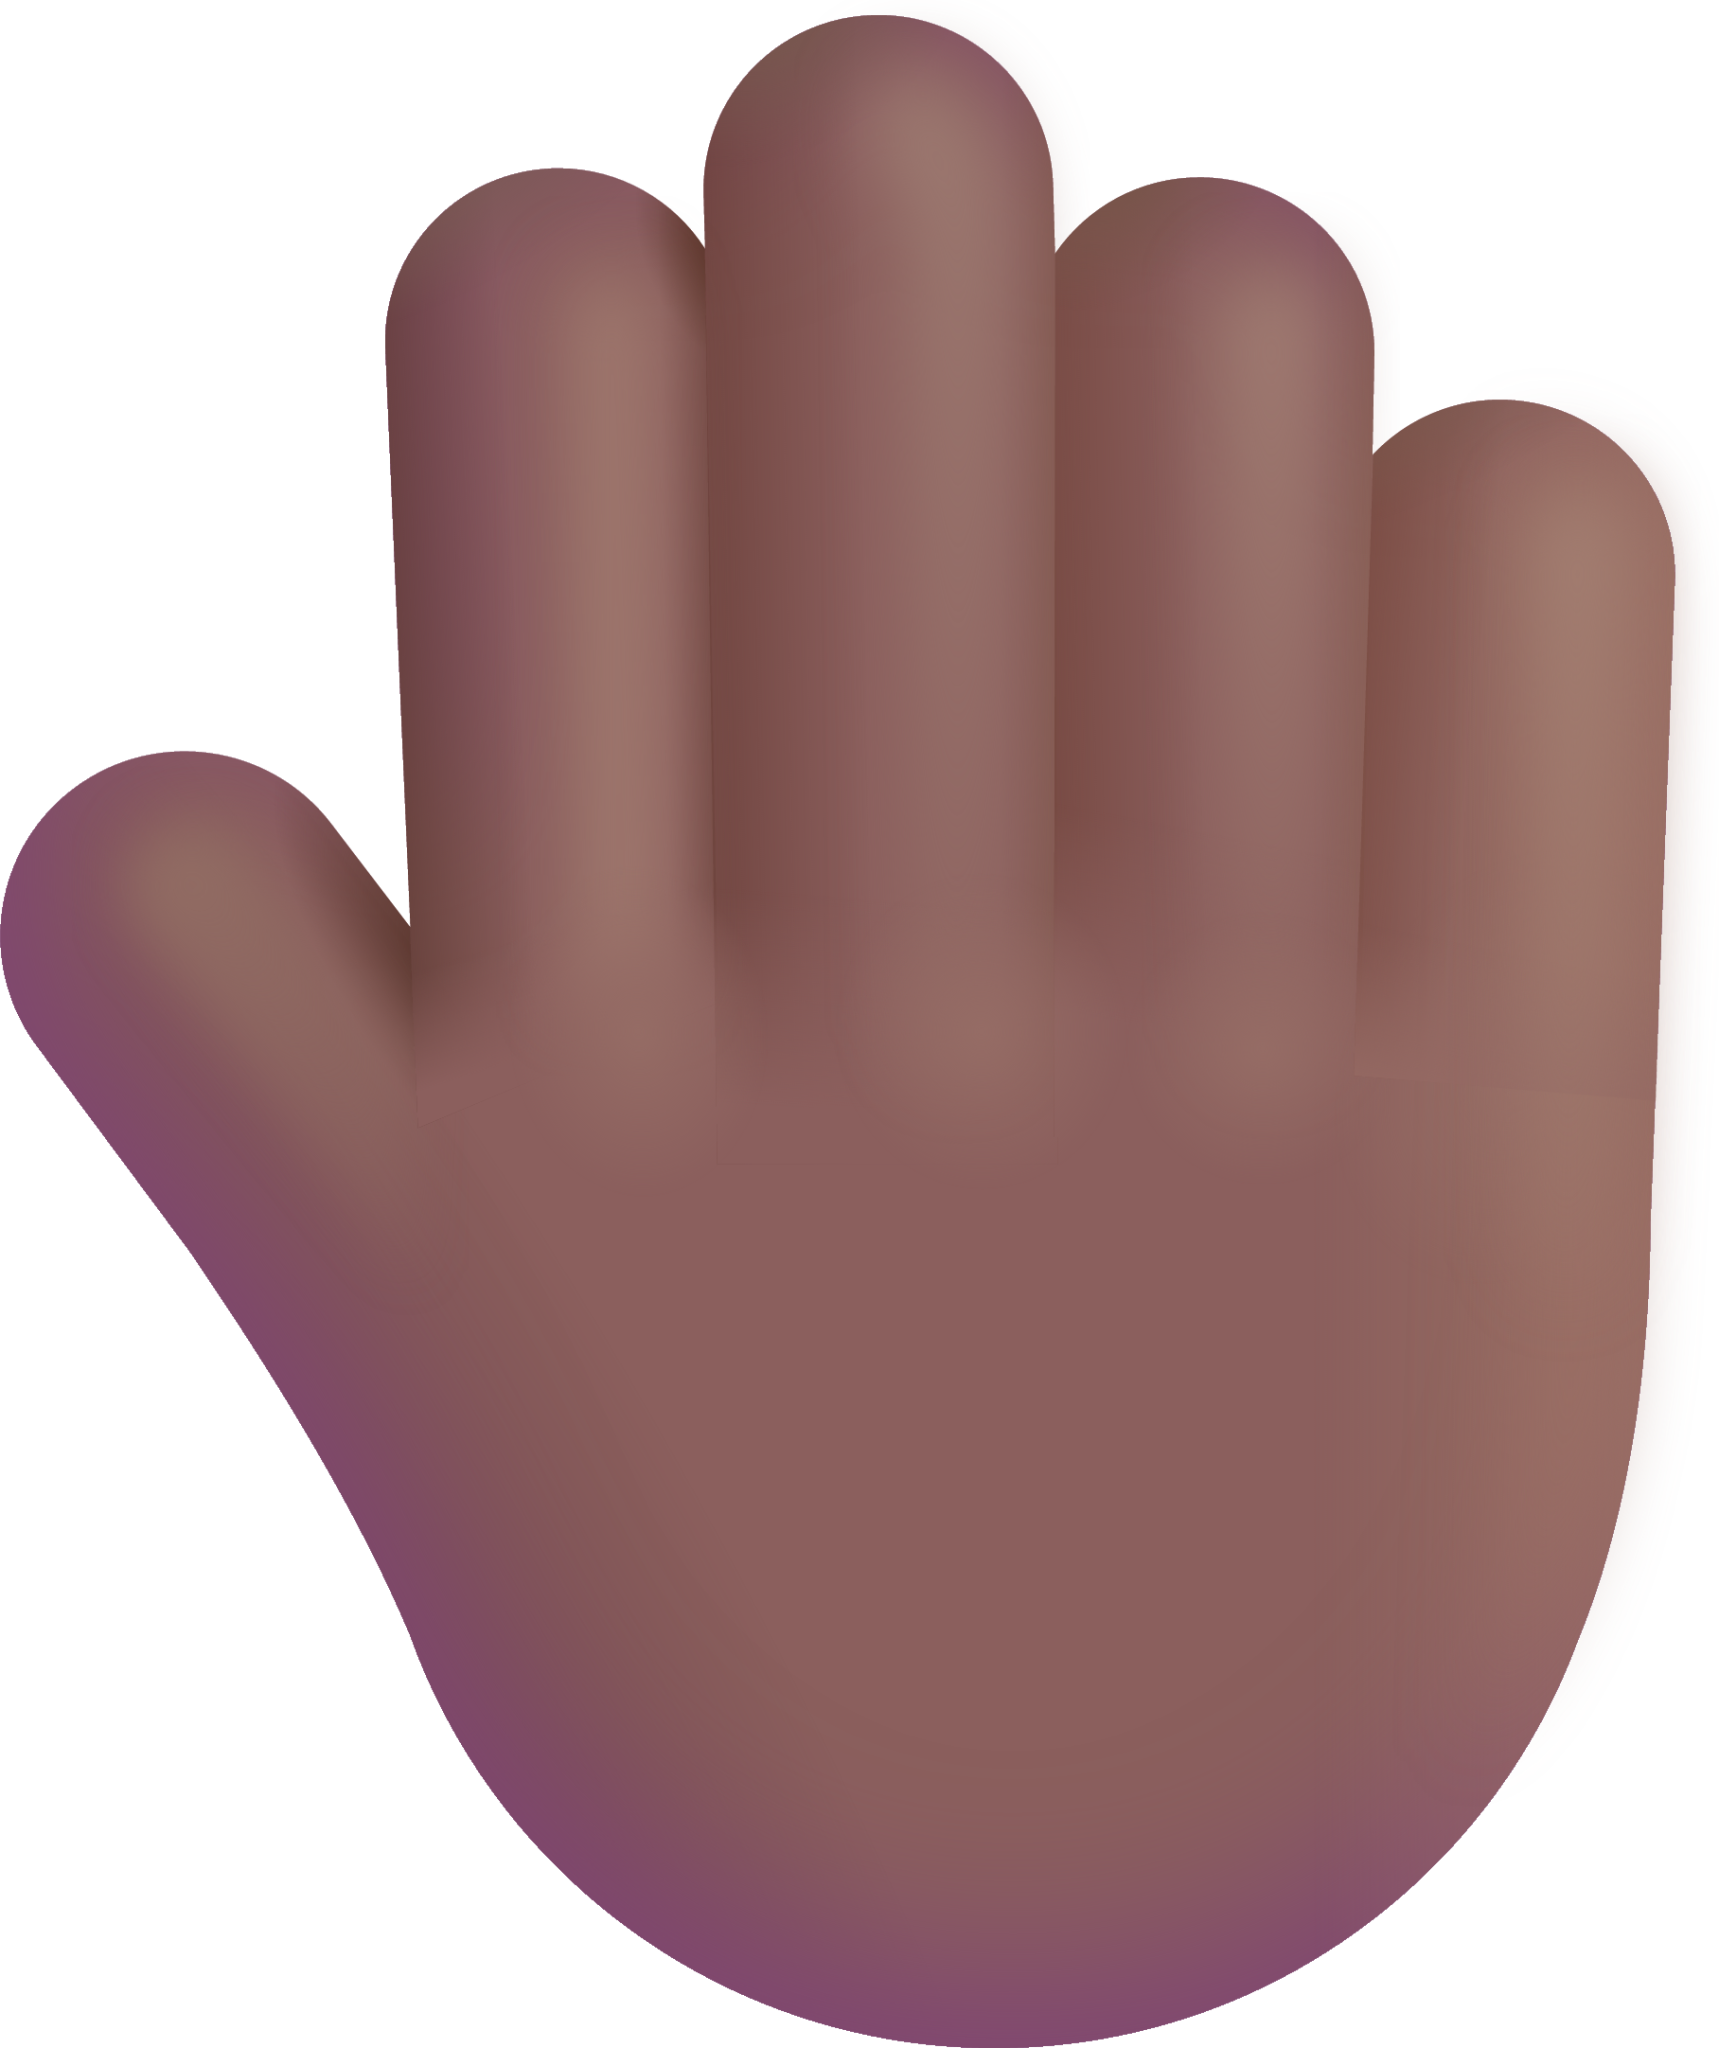 raised back of hand medium dark emoji